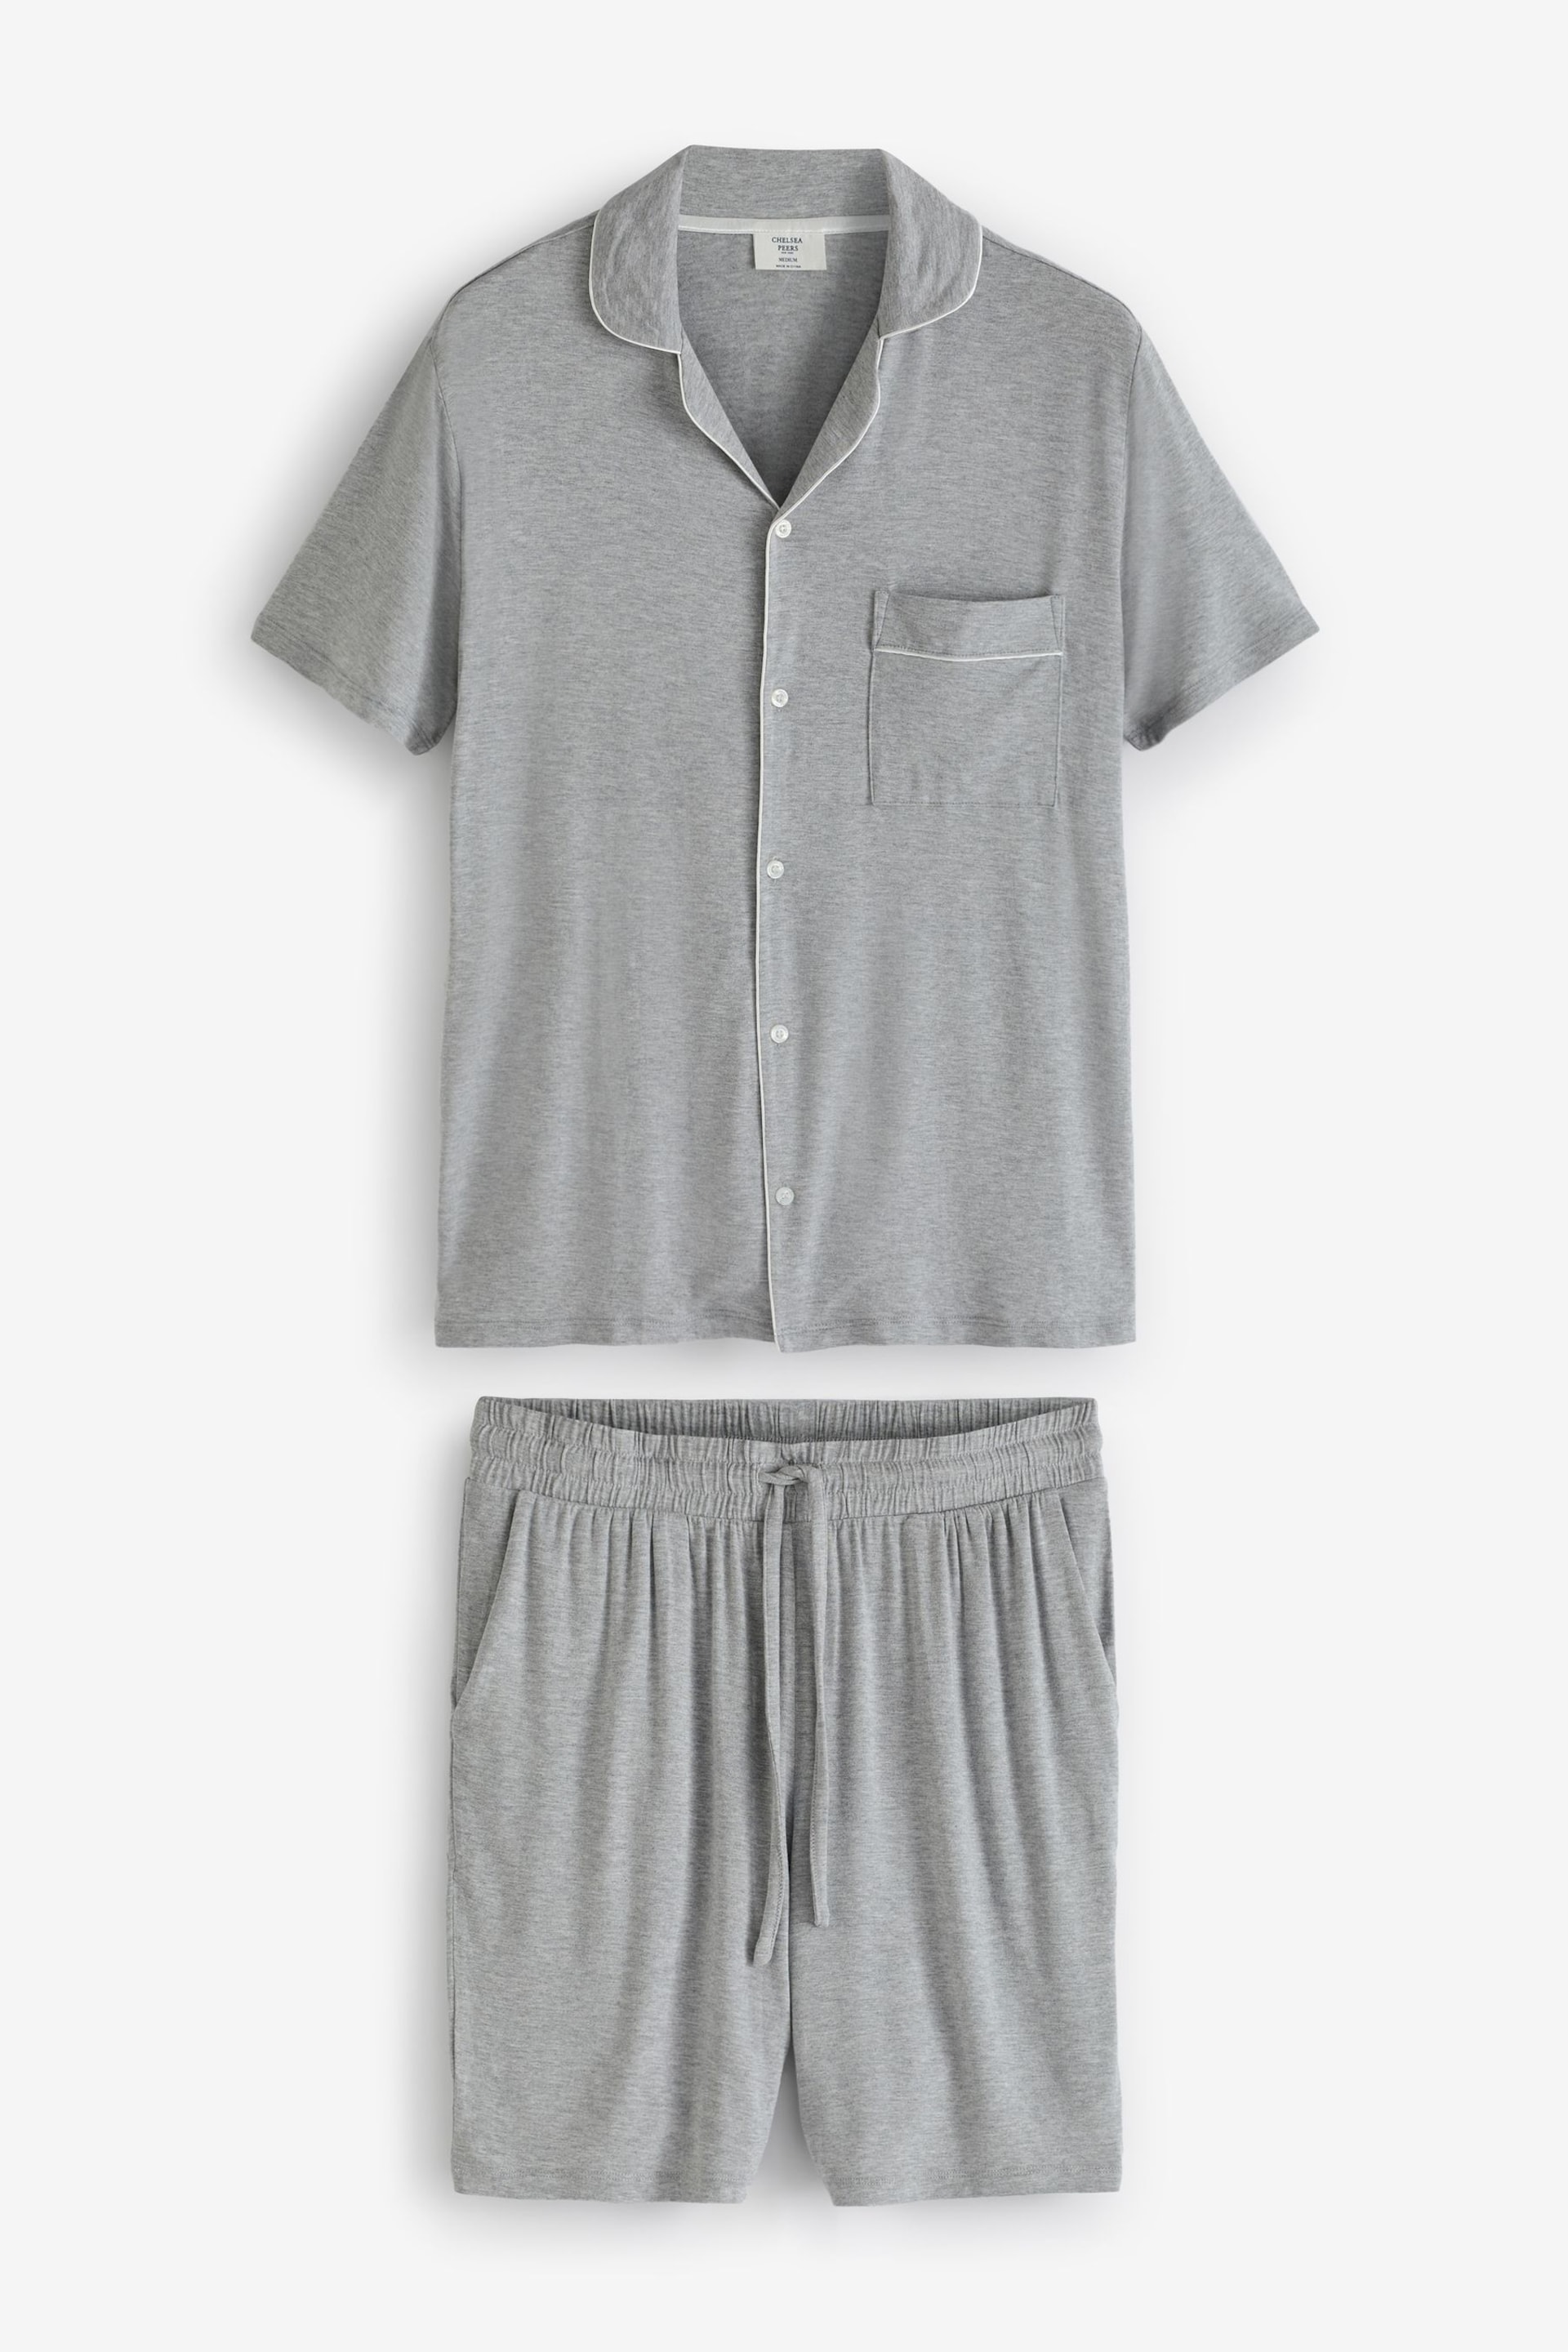 Chelsea Peers Grey Mens Modal Button Up Short Pyjamas Set - Image 6 of 8